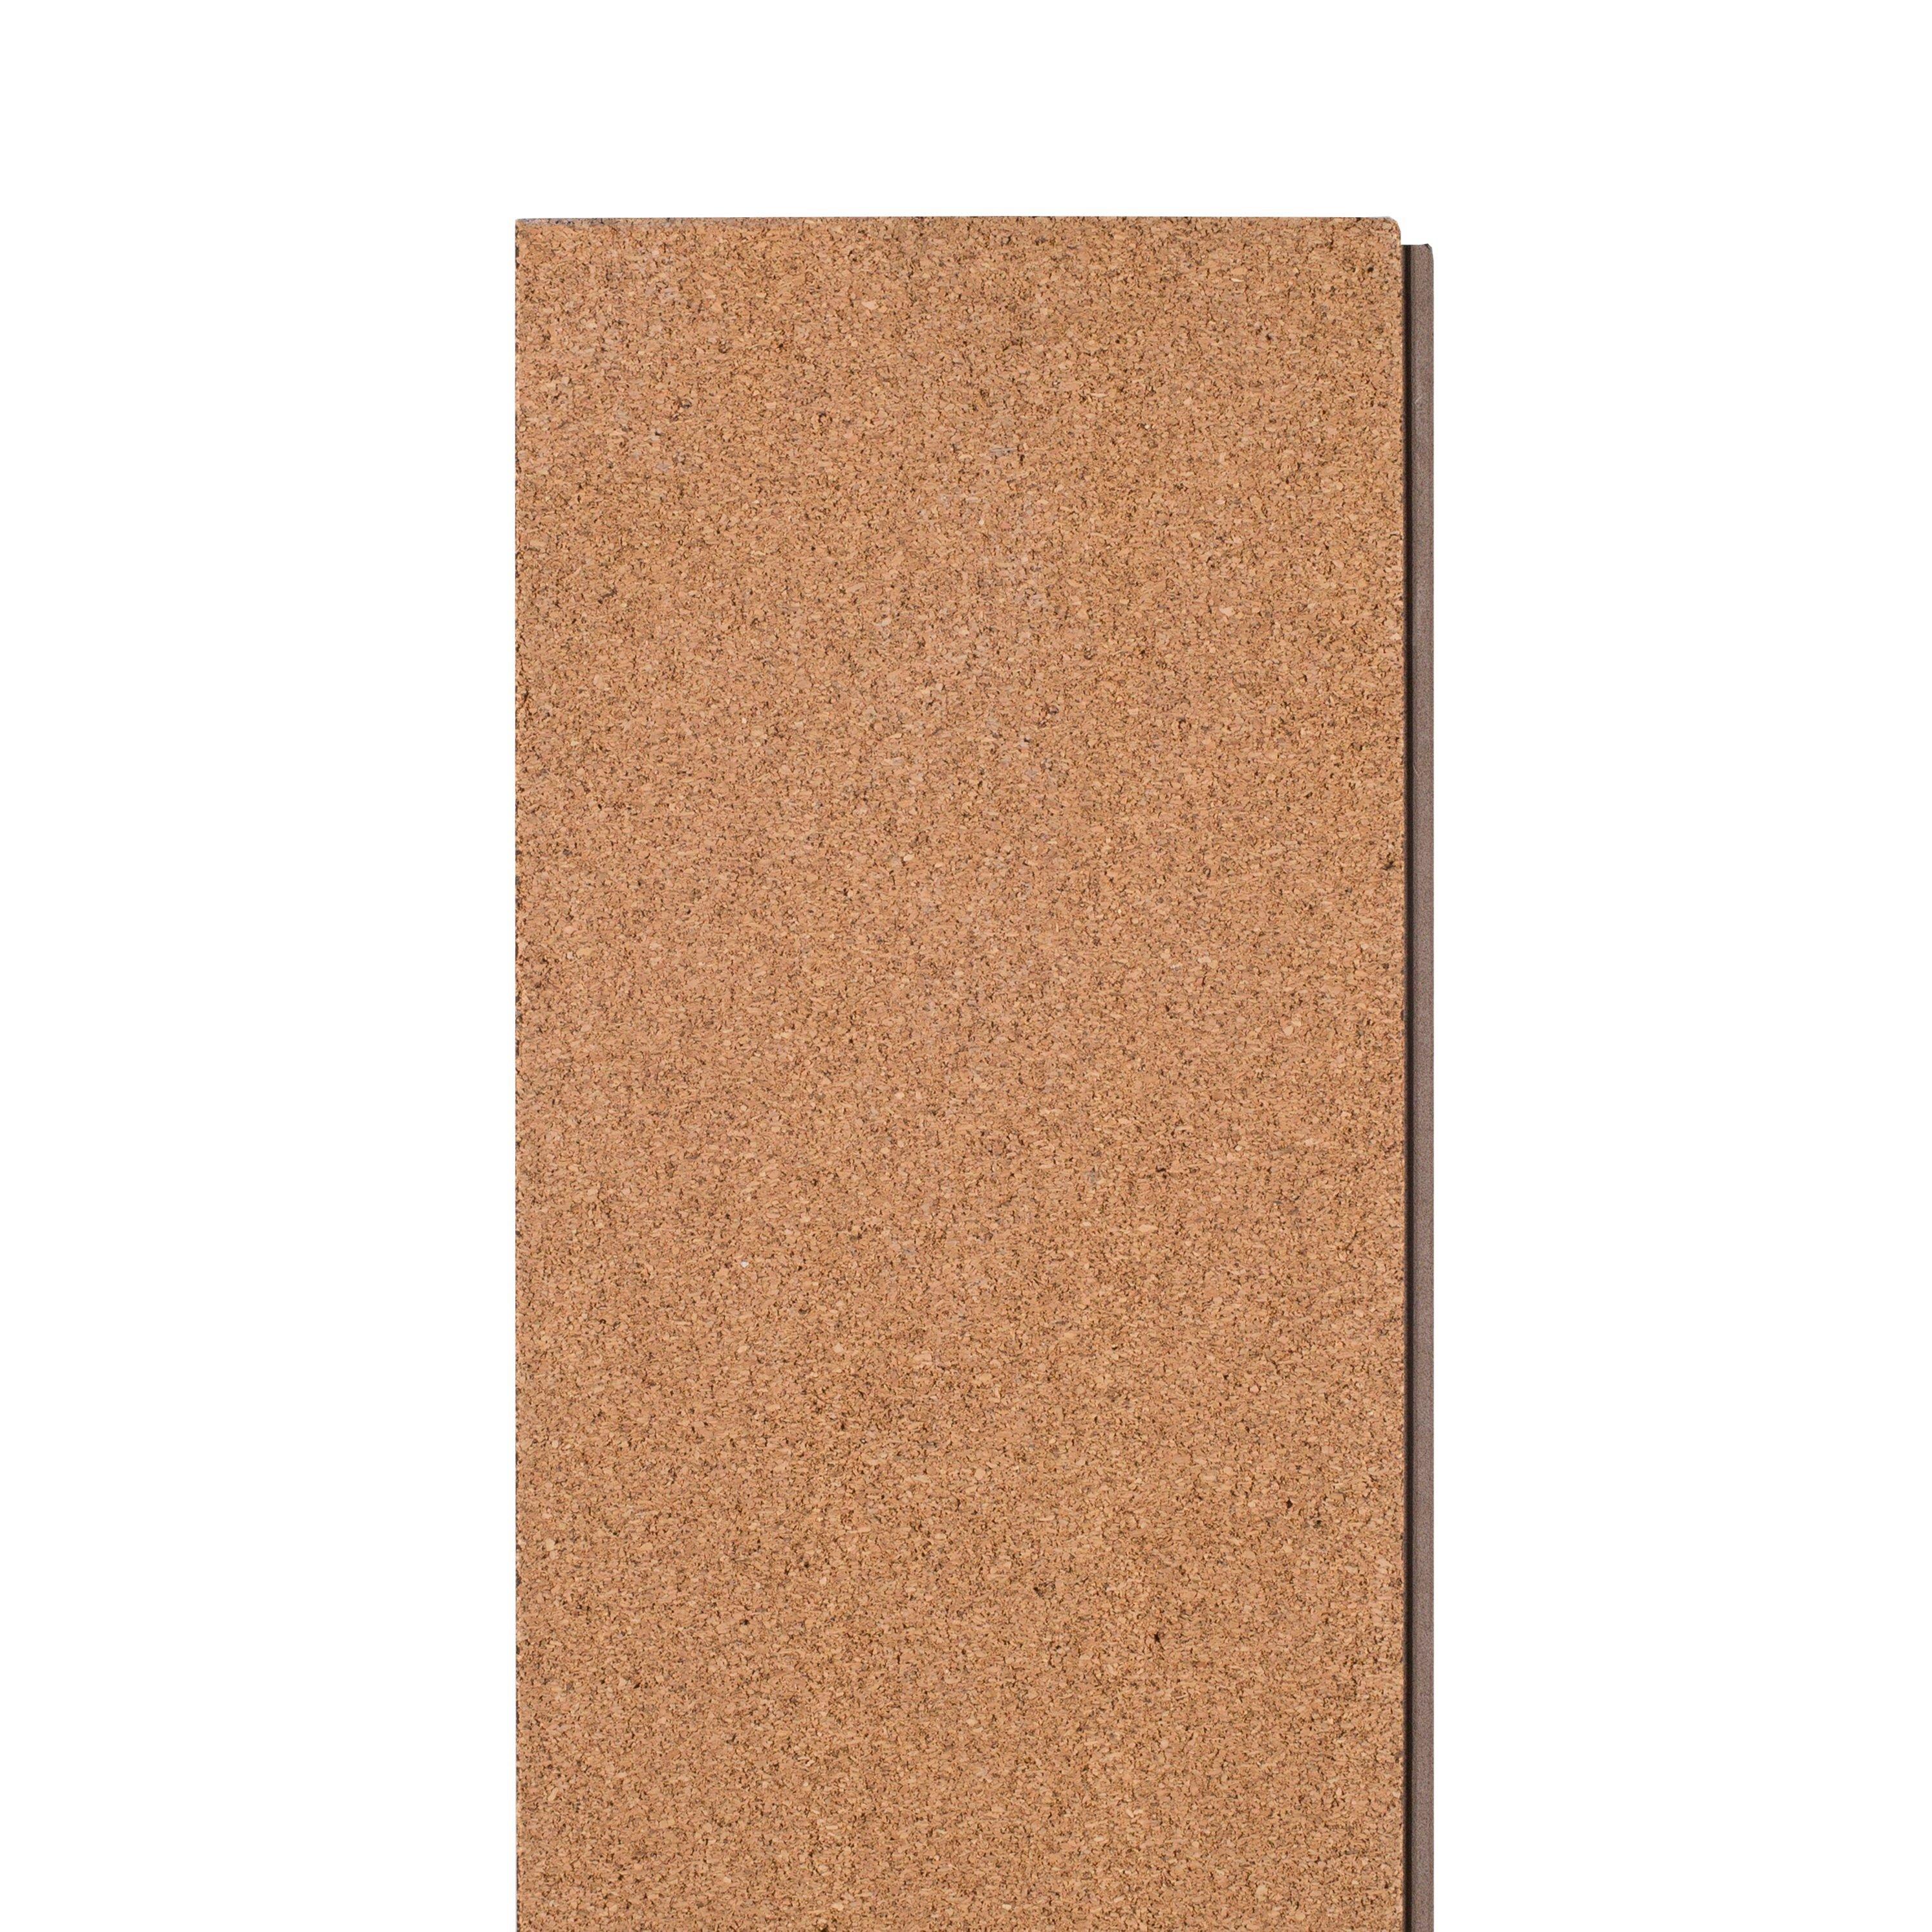 Howell Point Rigid Core Luxury Vinyl Plank - Cork Back